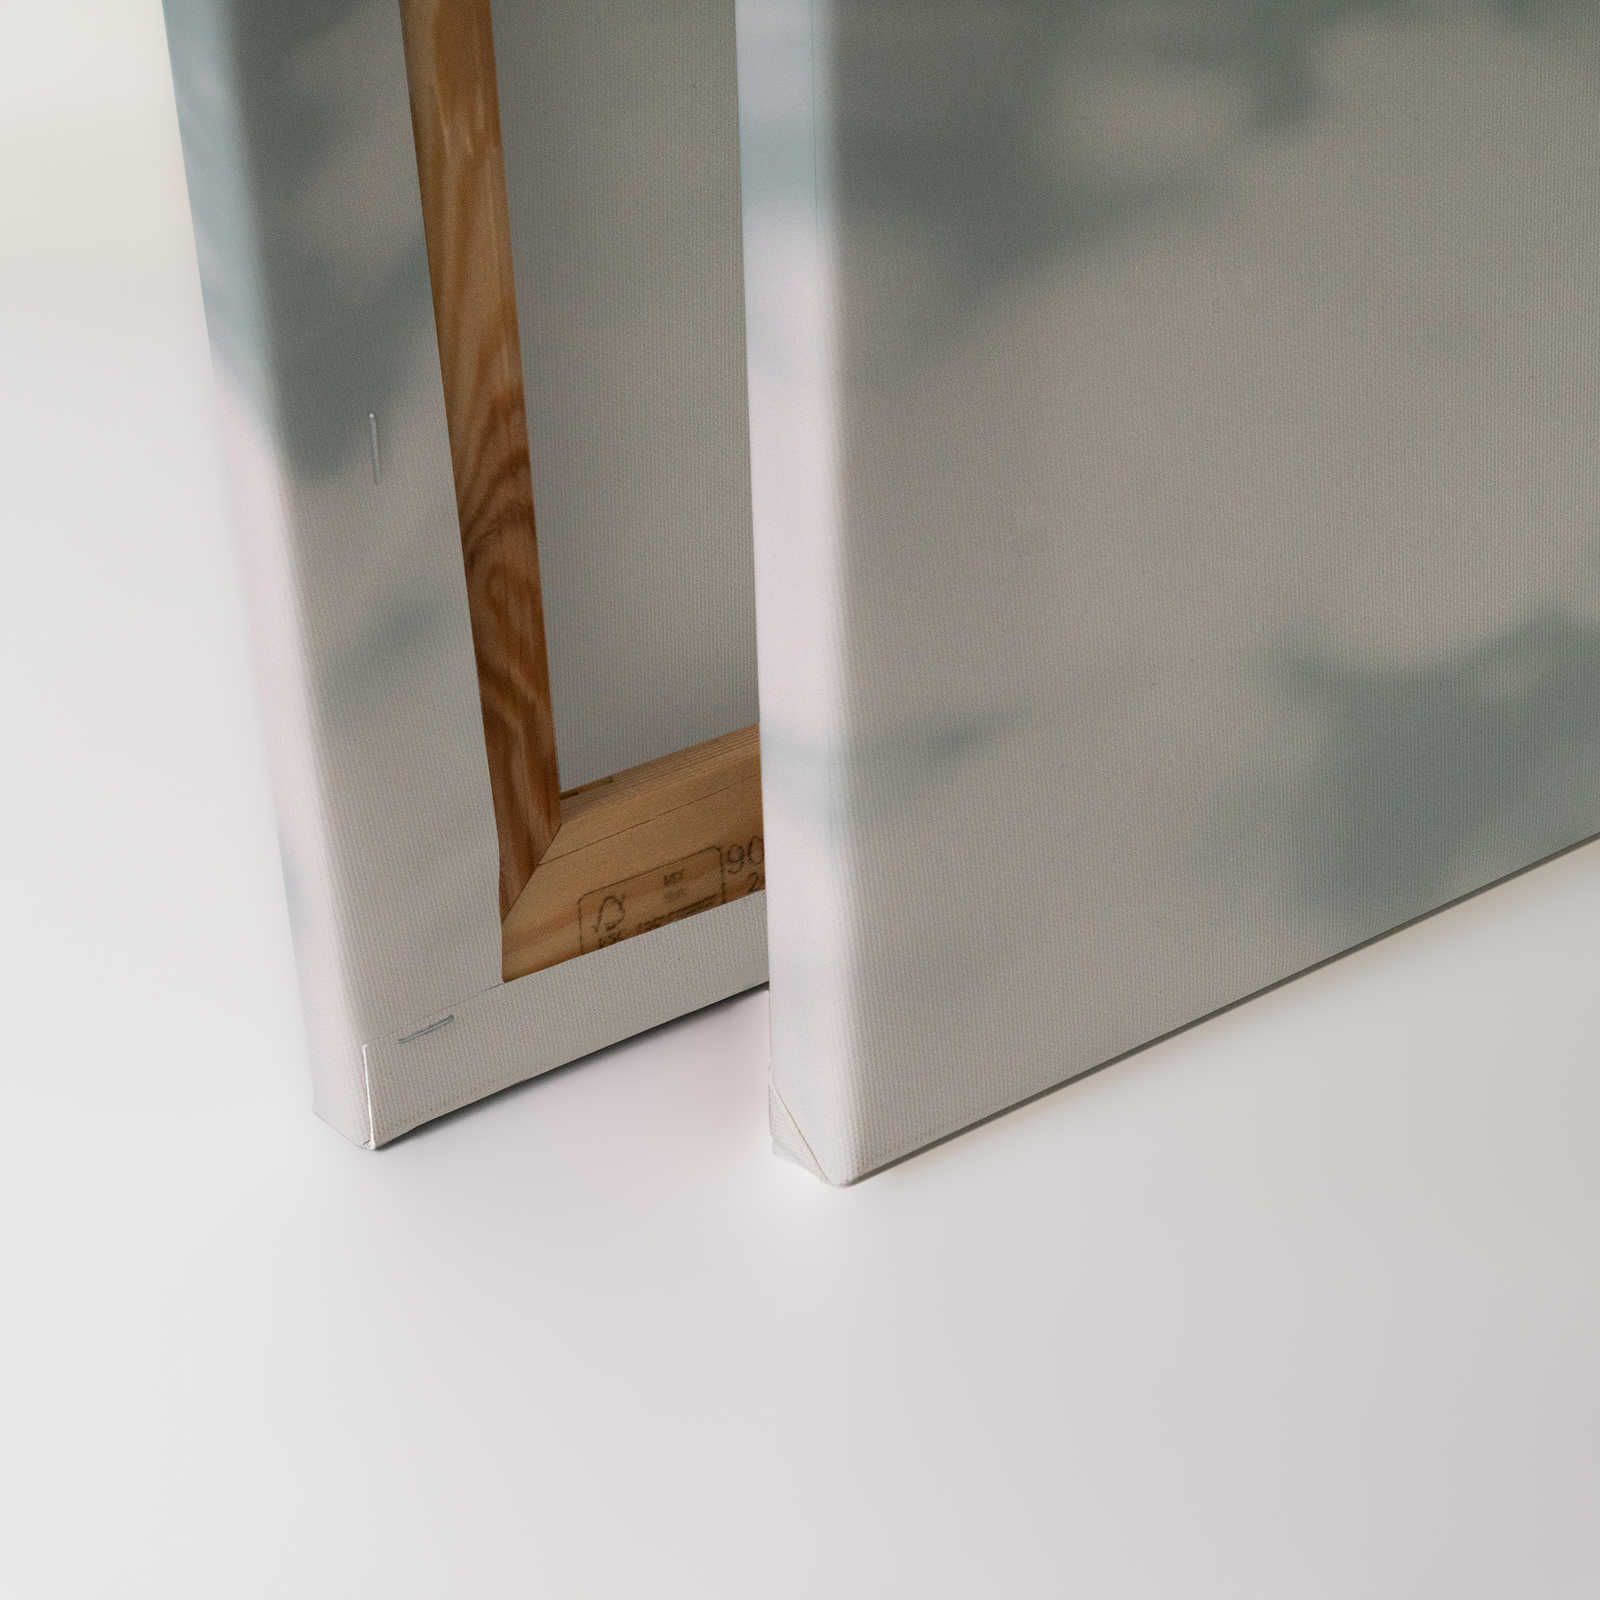             Light Room 2 - Leinwandbild Natur Schatten in Blaugrün & Weiß – 0,90 m x 0,60 m
        